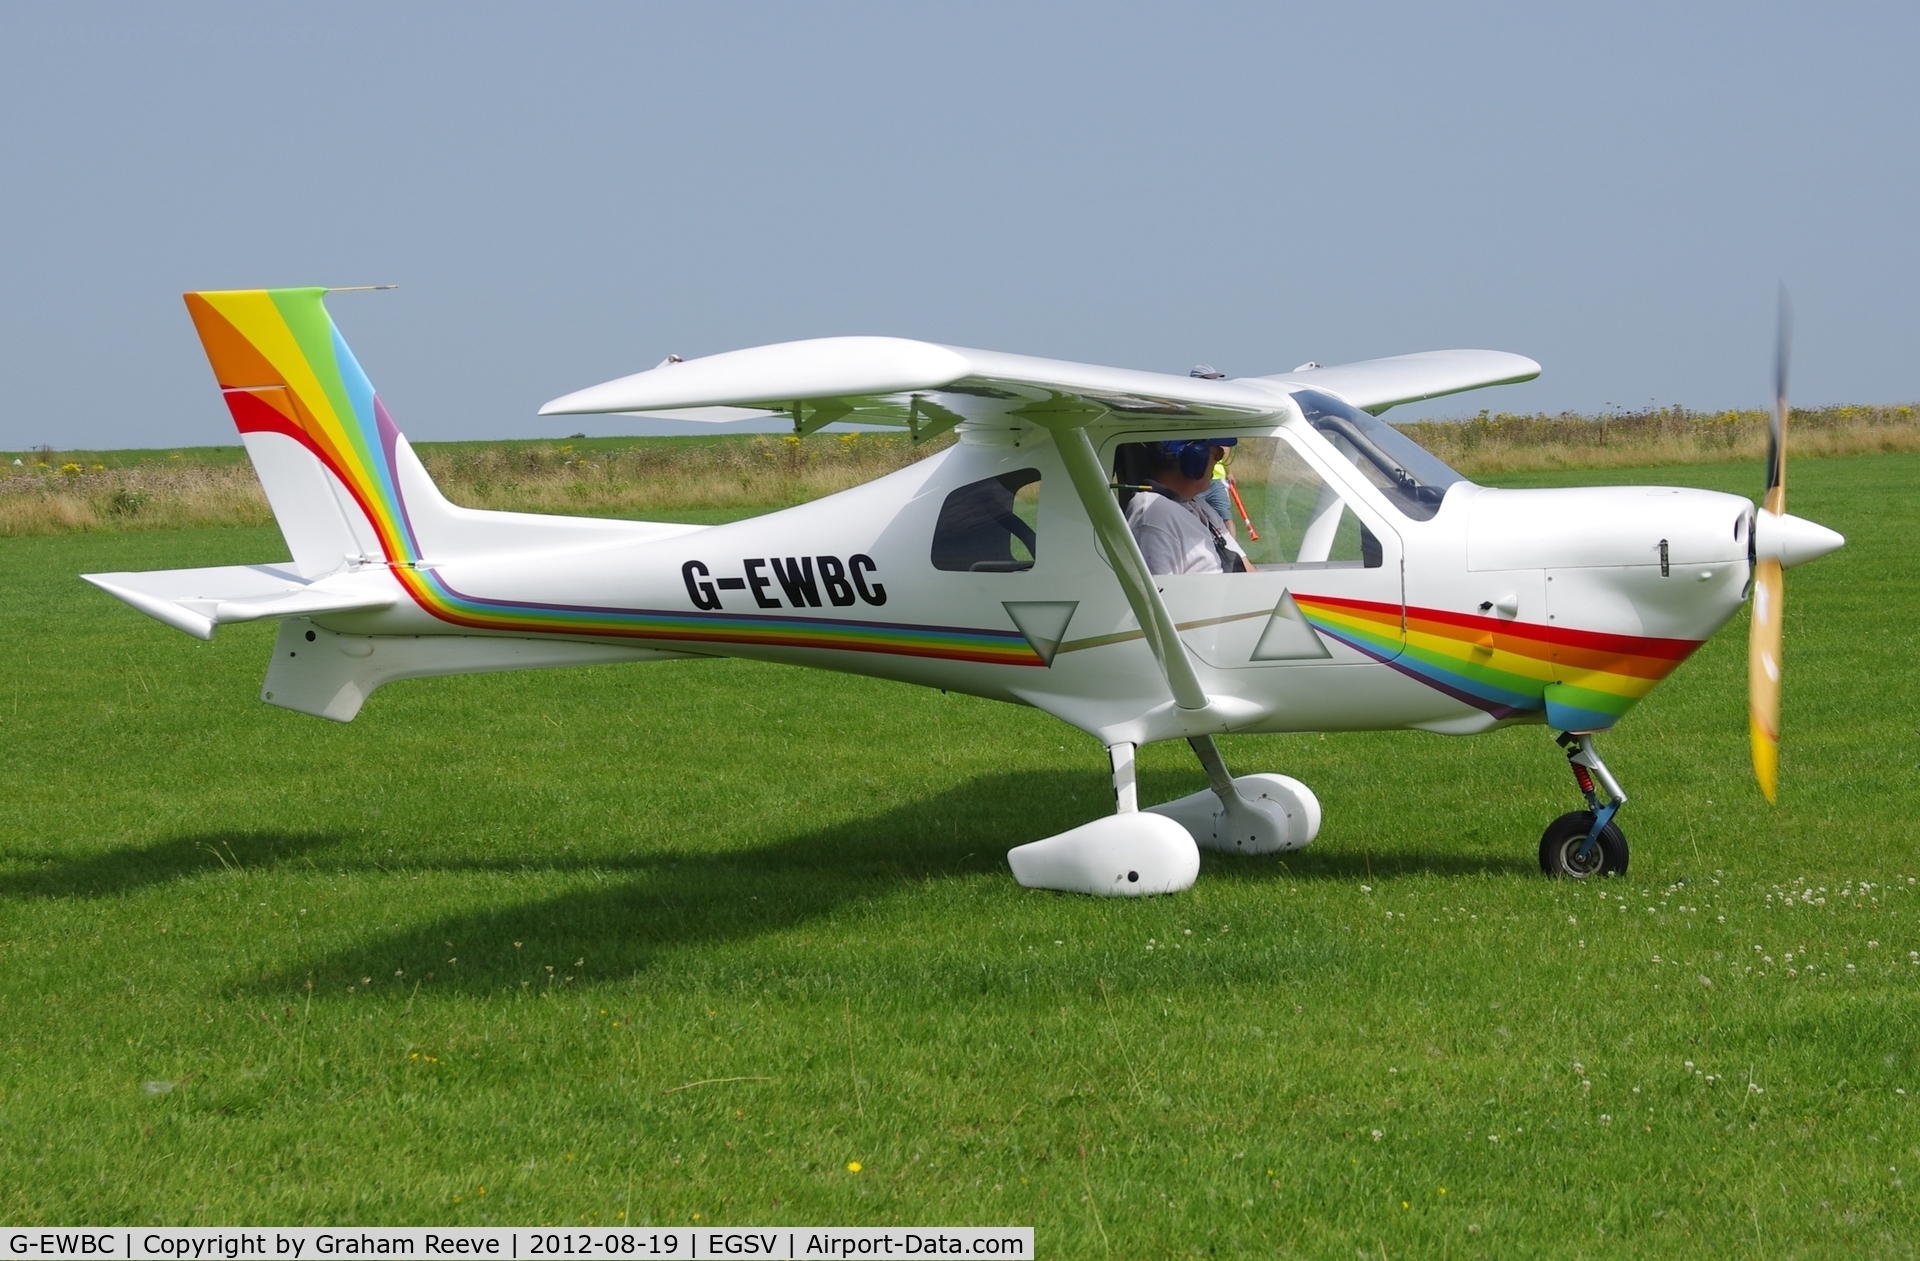 G-EWBC, 2001 Jabiru SK C/N PFA 274-13457, Just landed.